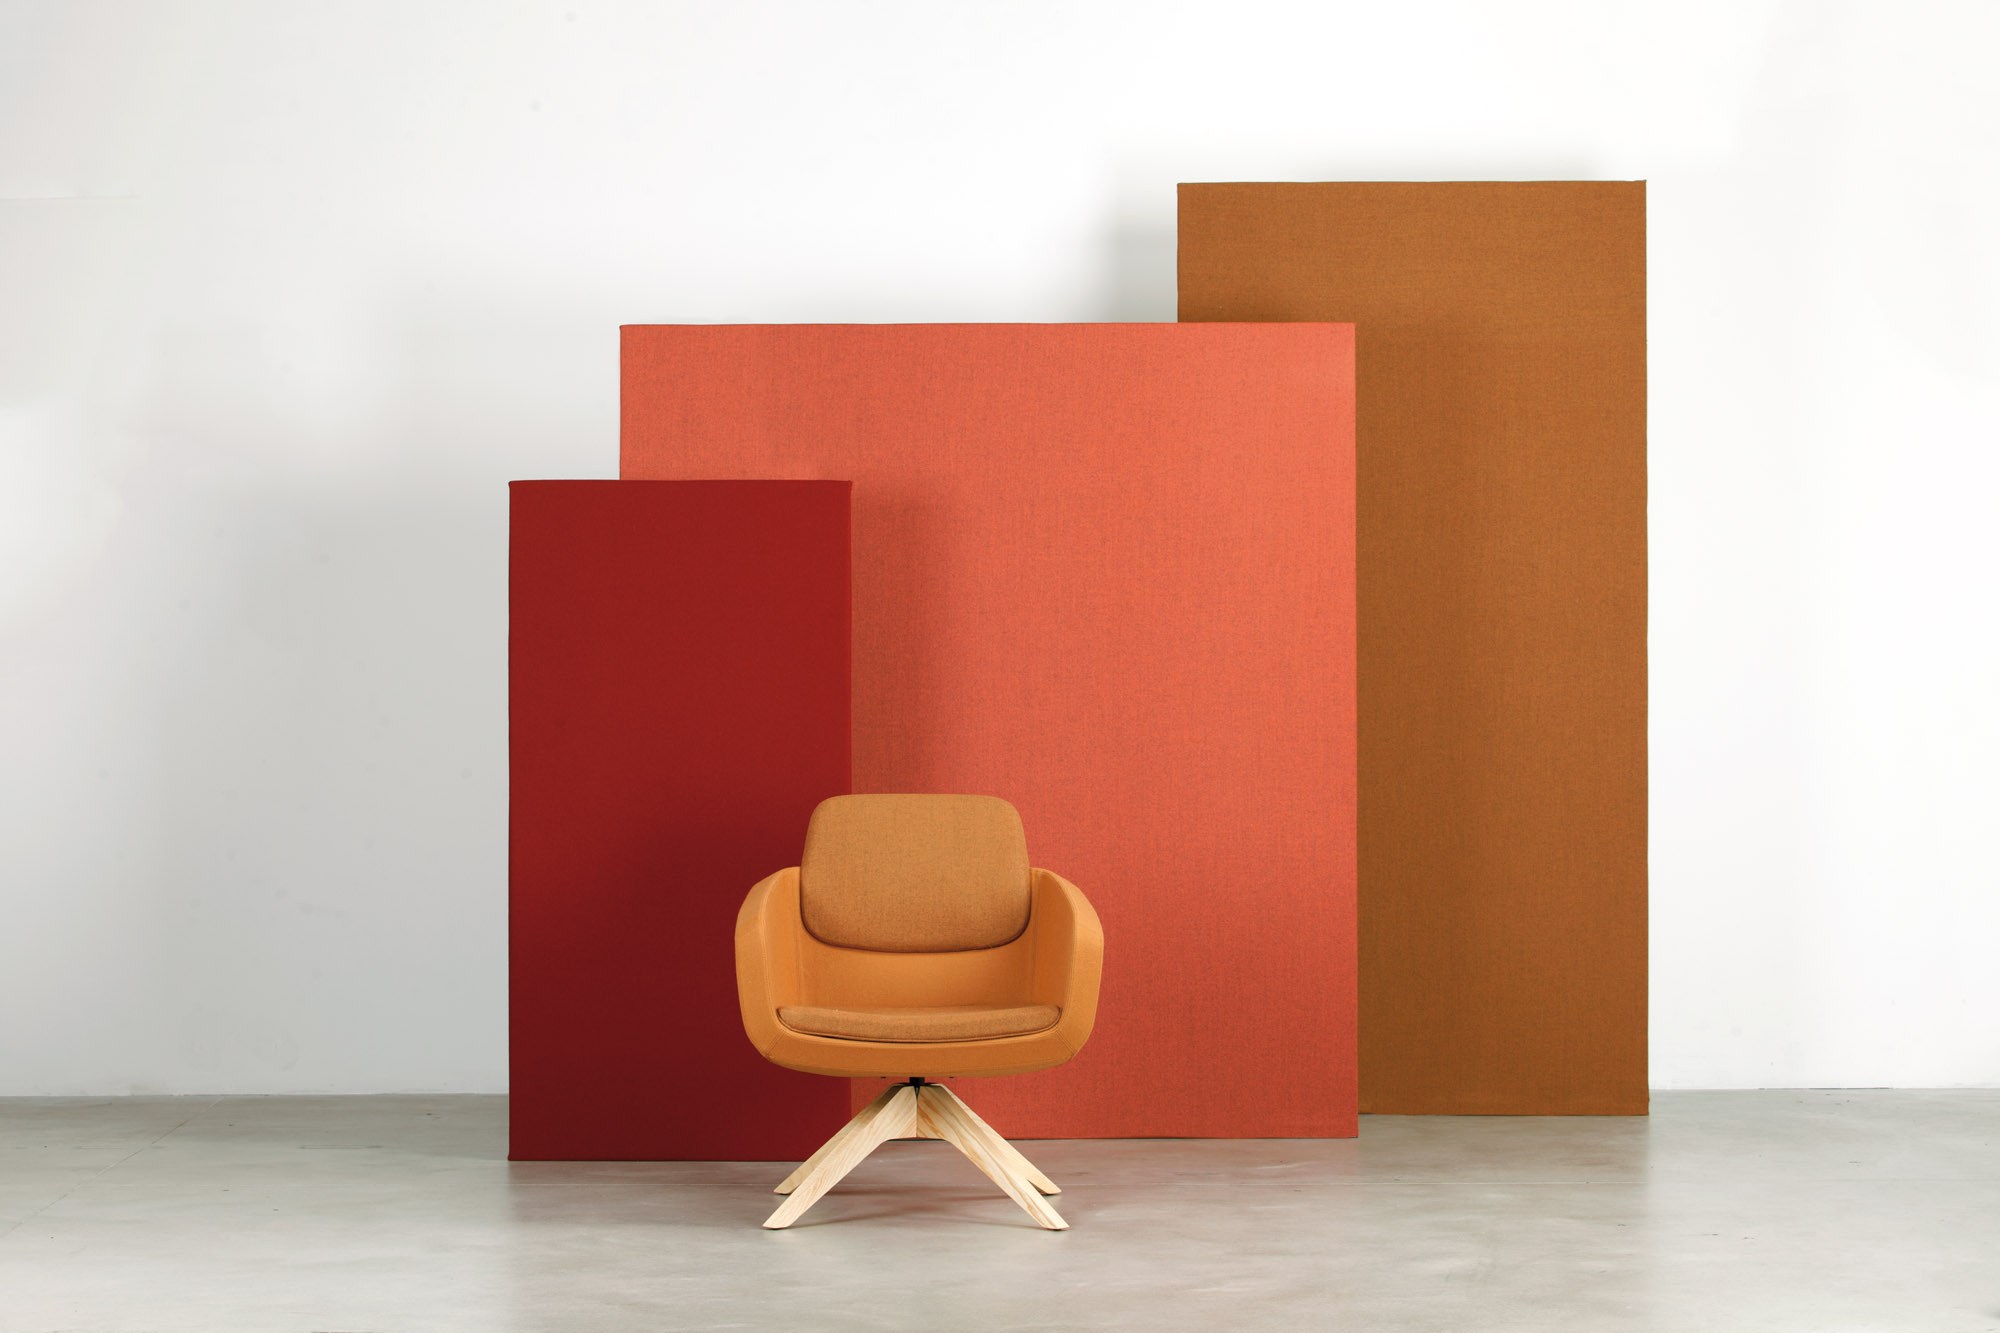 Arca Chair by Studio Orlandini for True Design